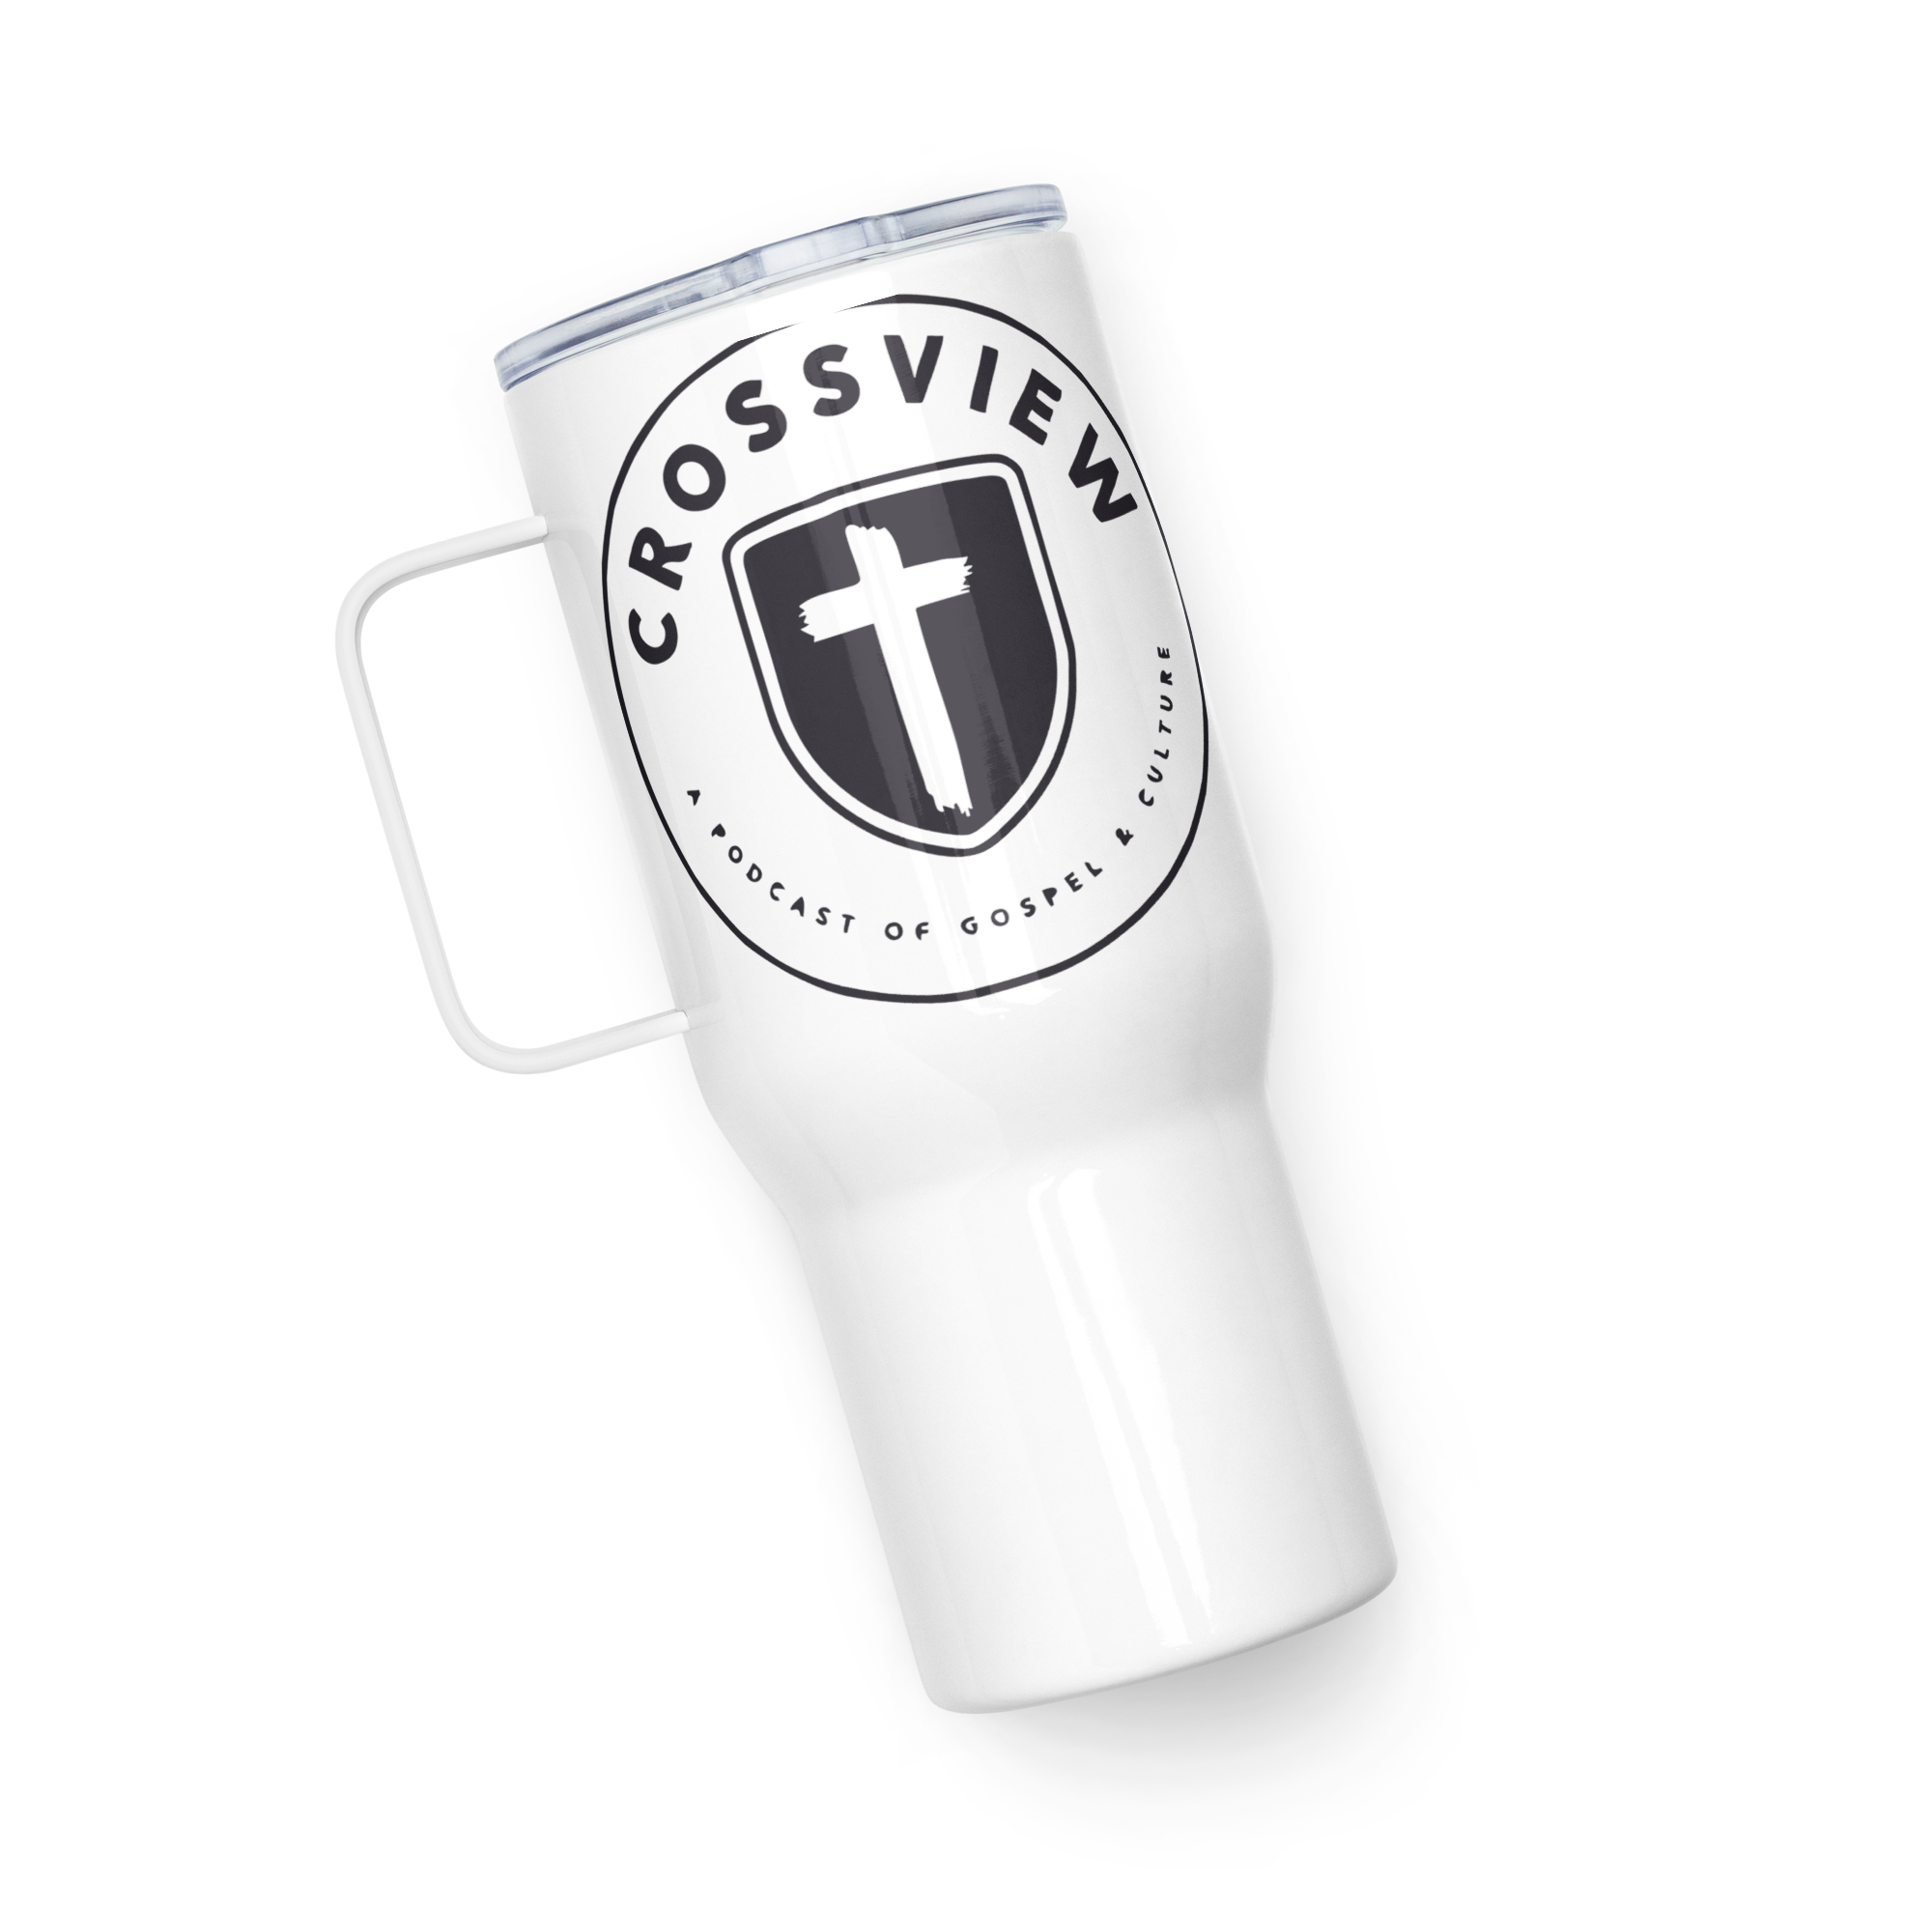 CrossView Podcast 25oz. Travel Mug with Handle